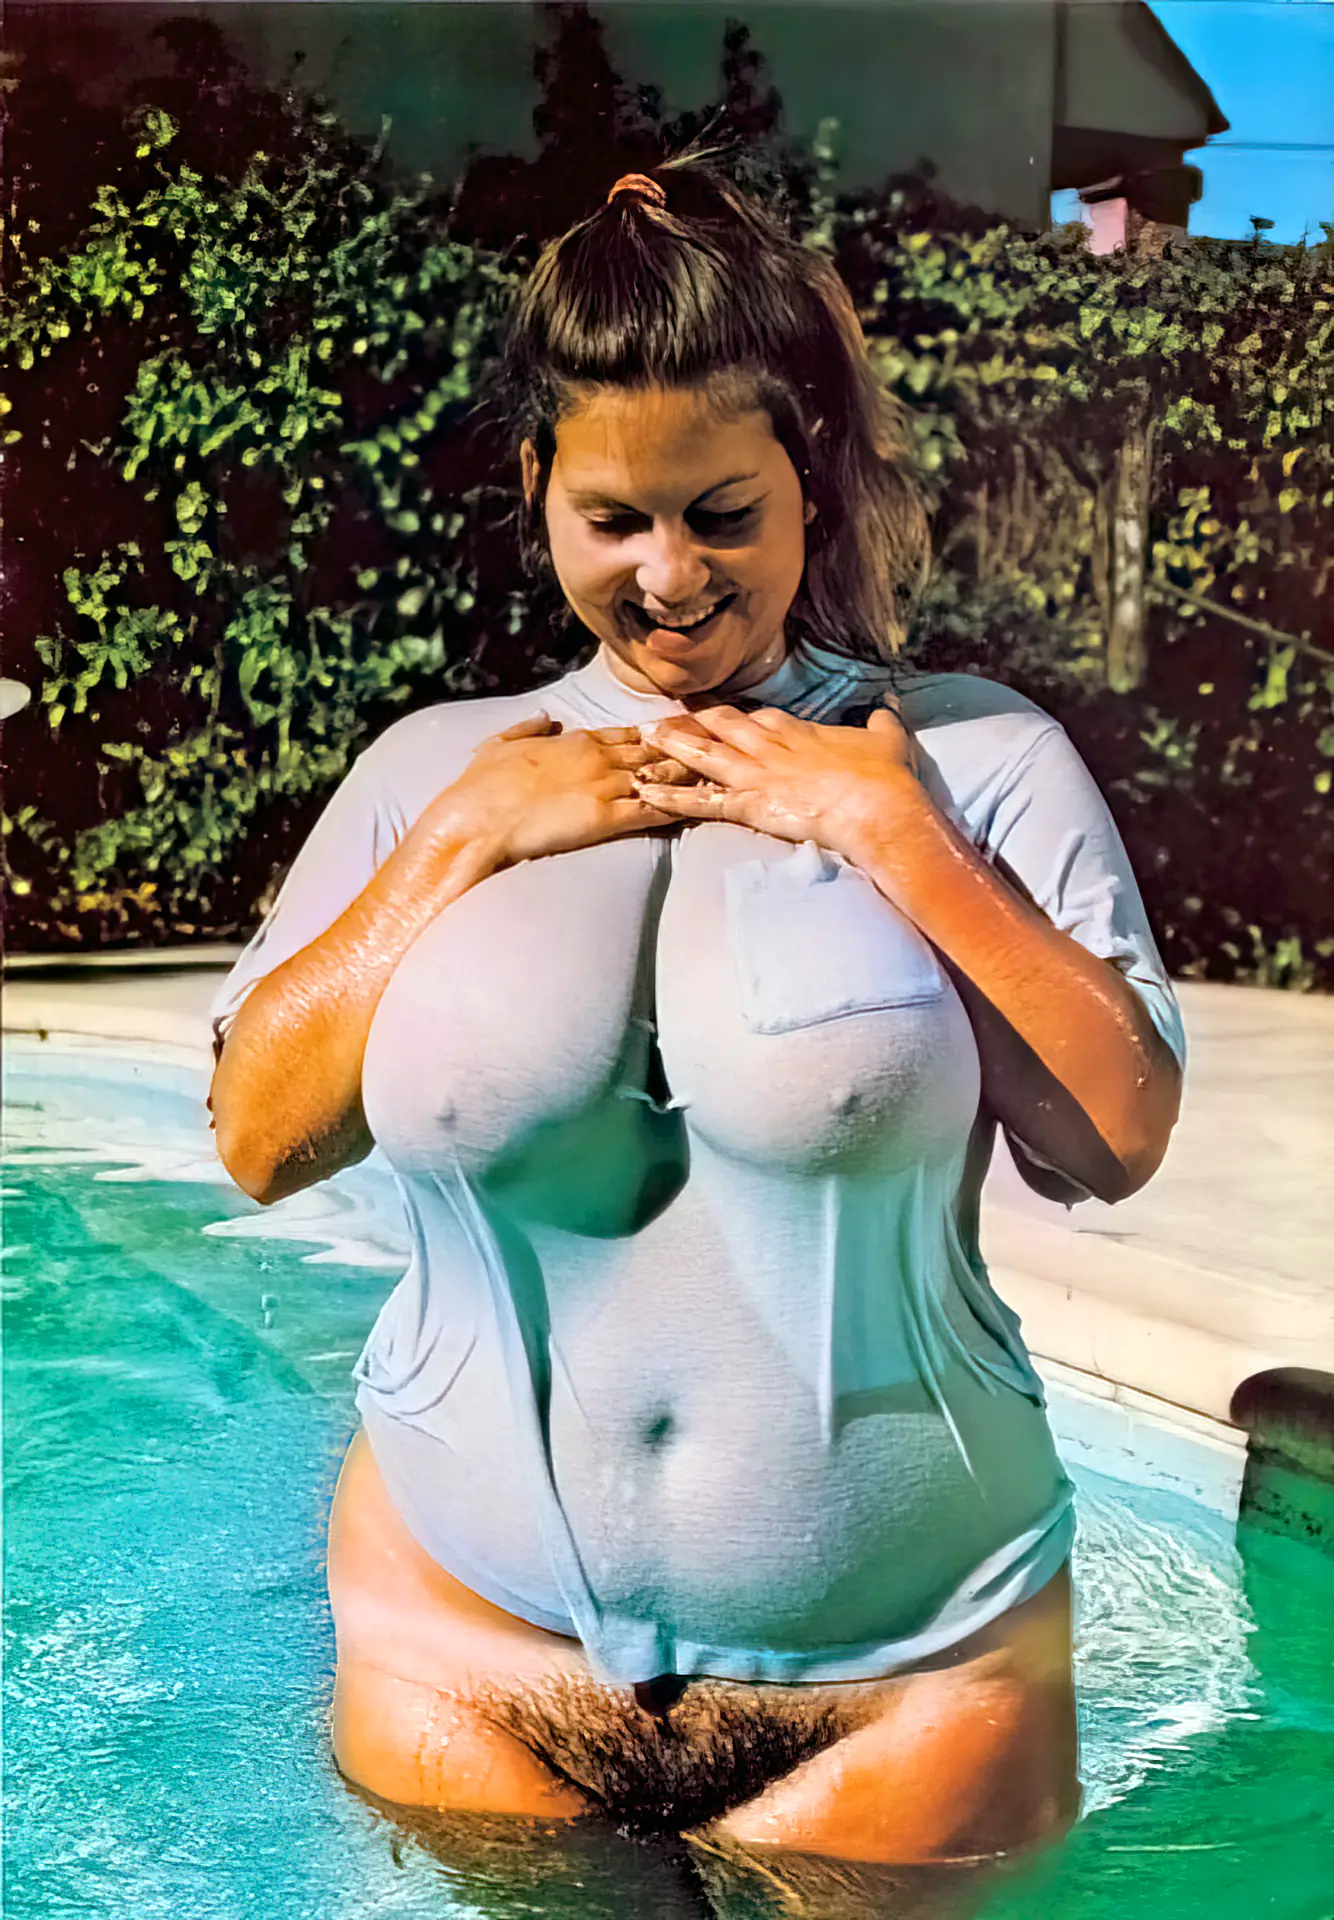 Karen Brown wearing a wet shirt soaks her bush into the pool